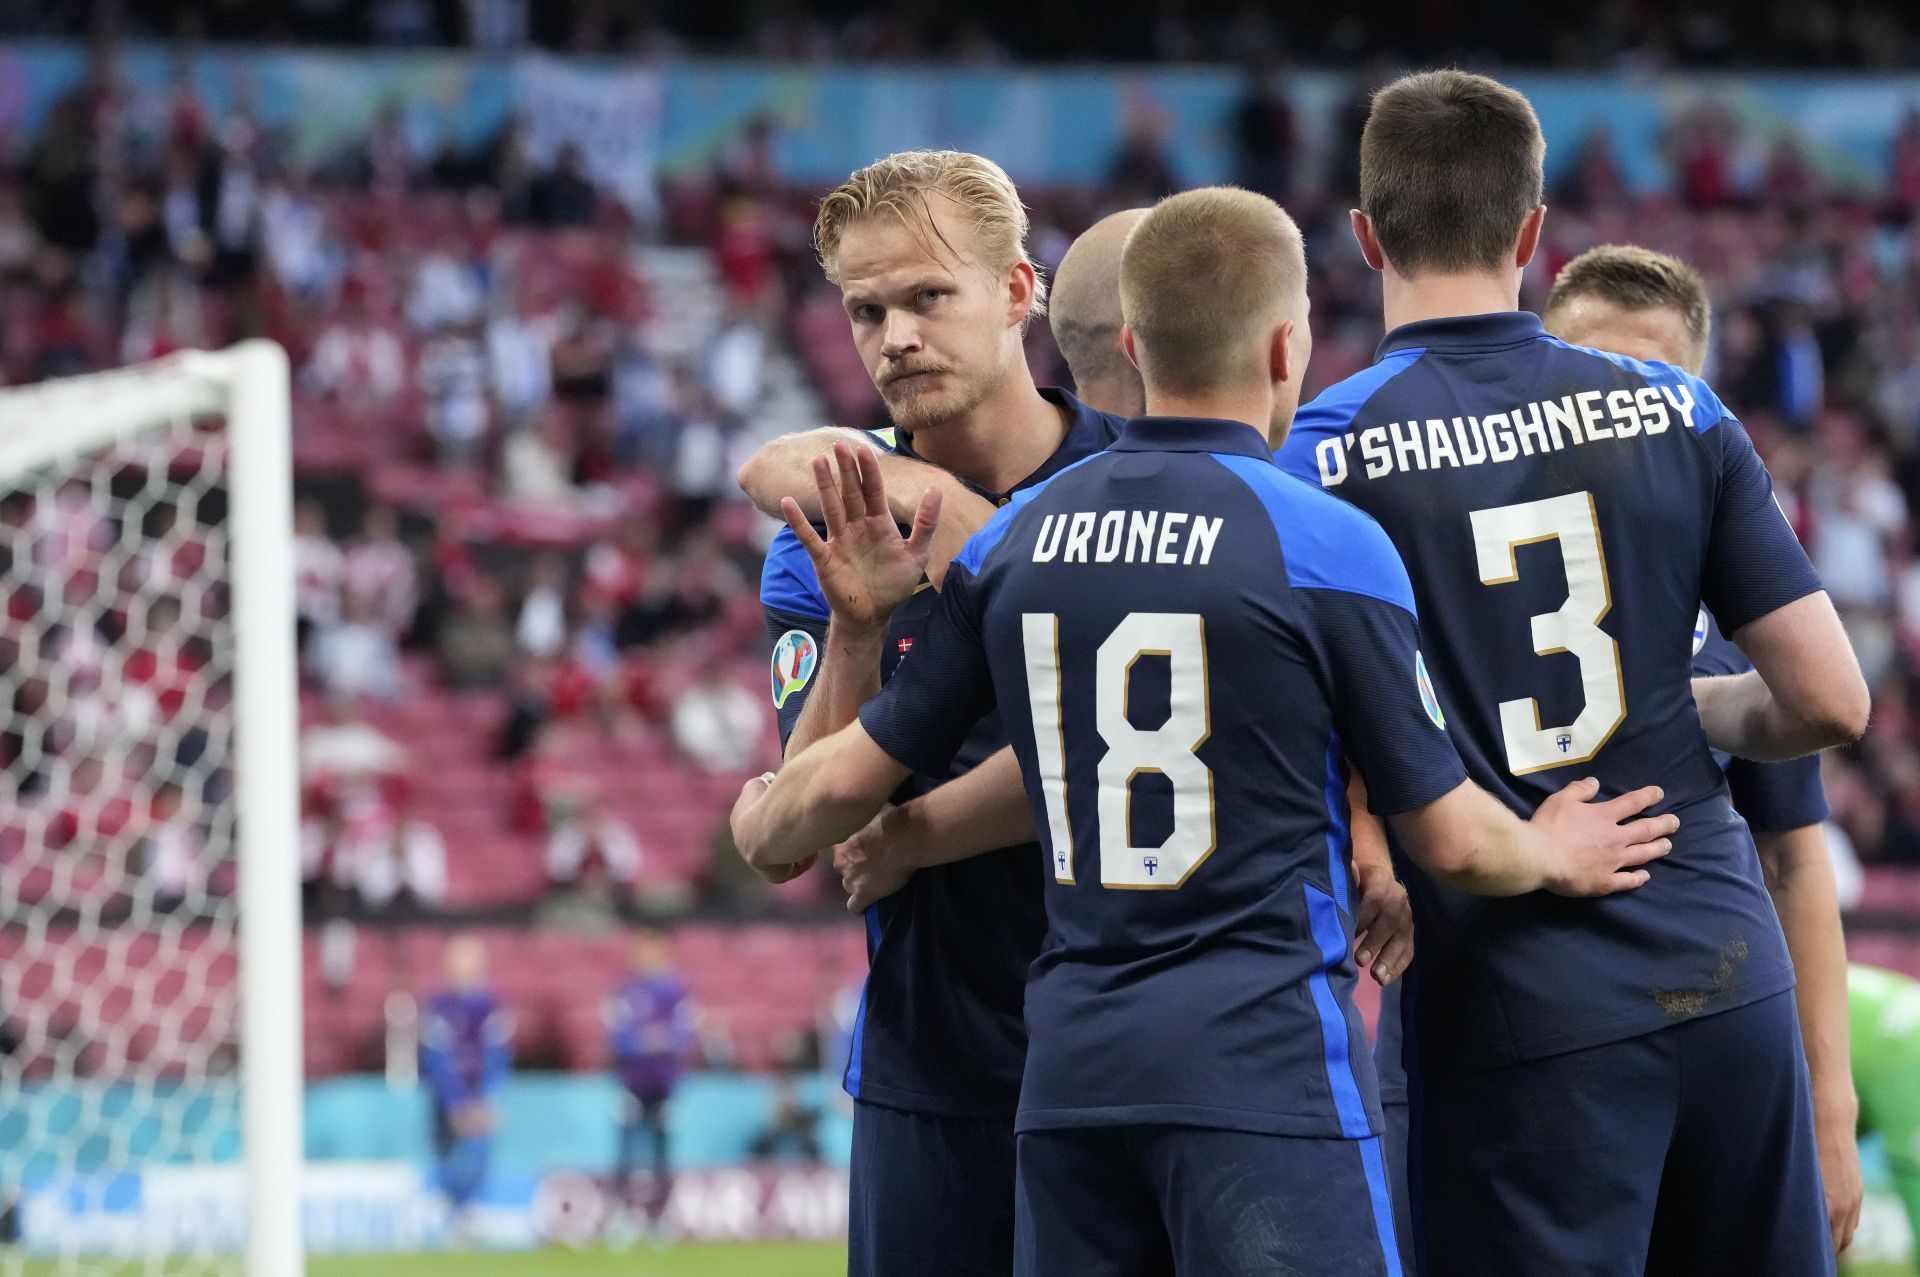 Finland will face Bosnia-Herzegovina on Saturday